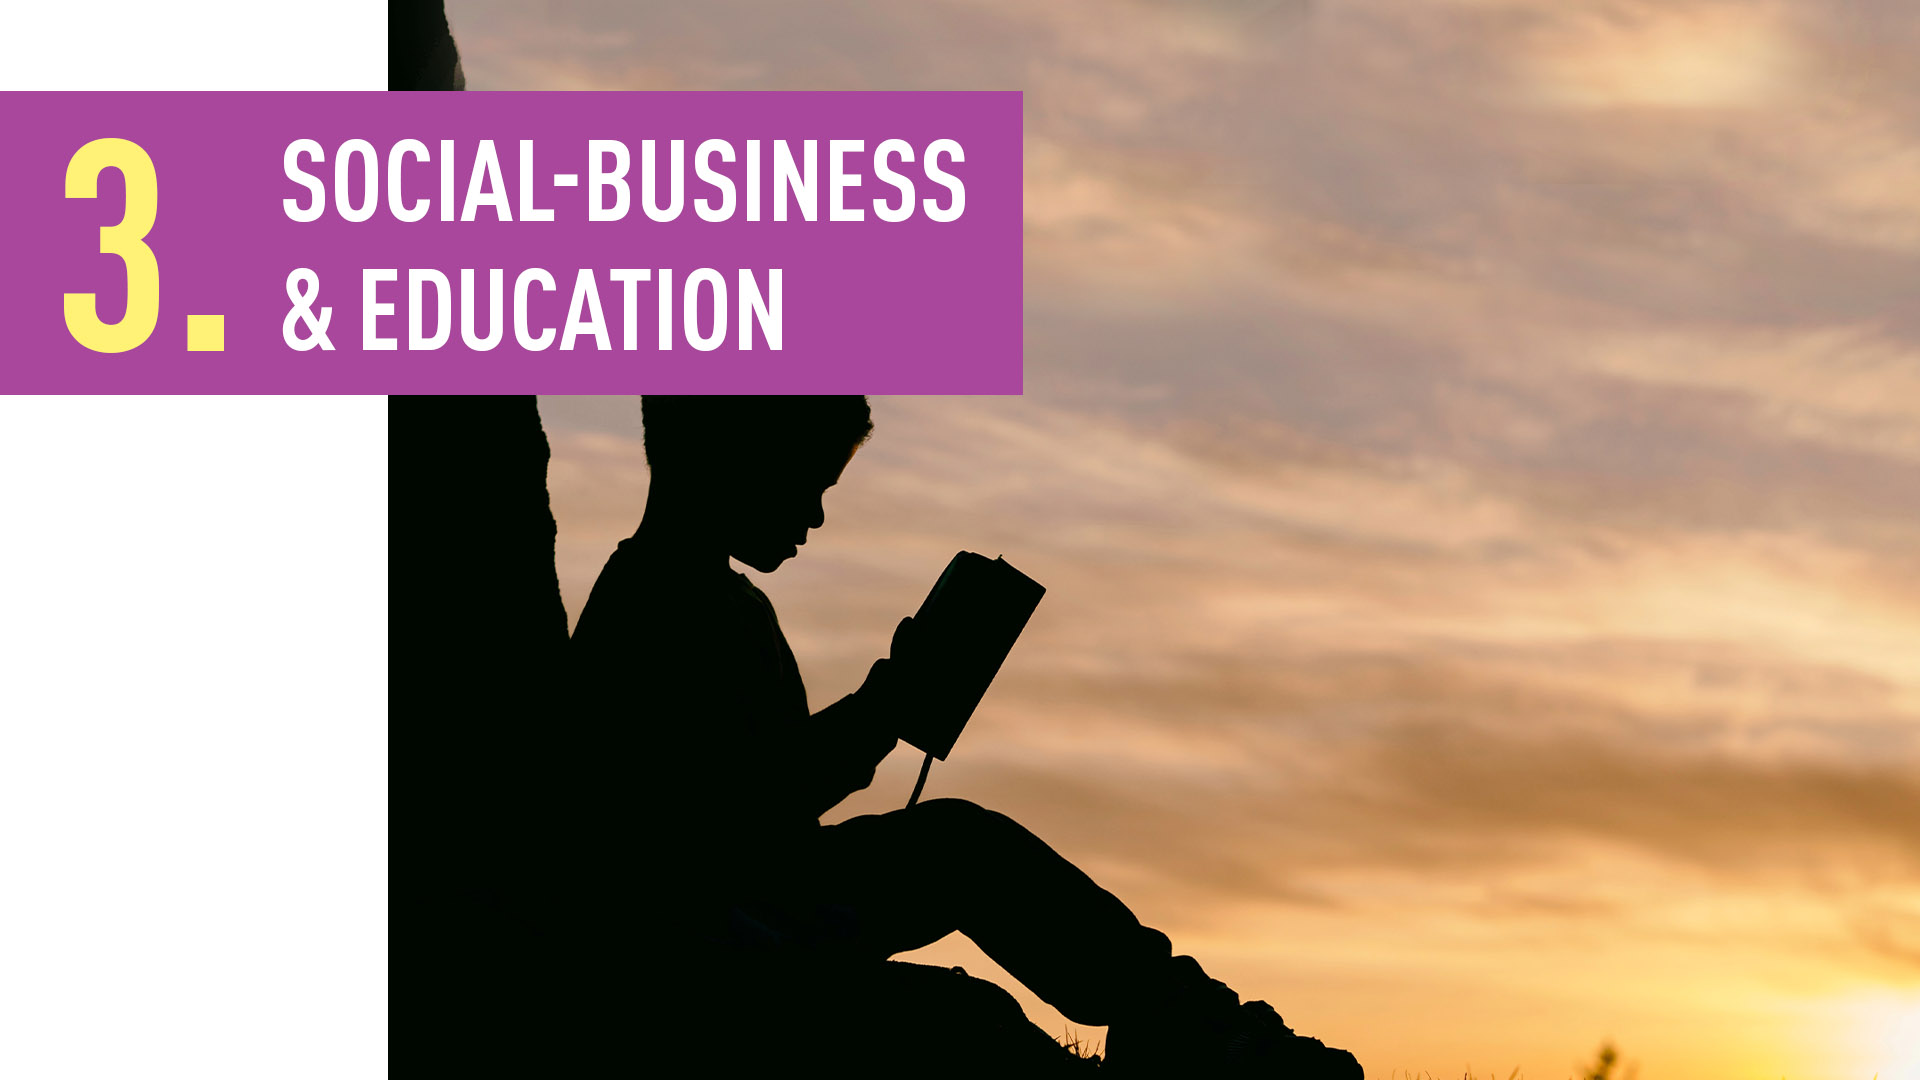 SOCIAL-BUSINESS & EDUCATION